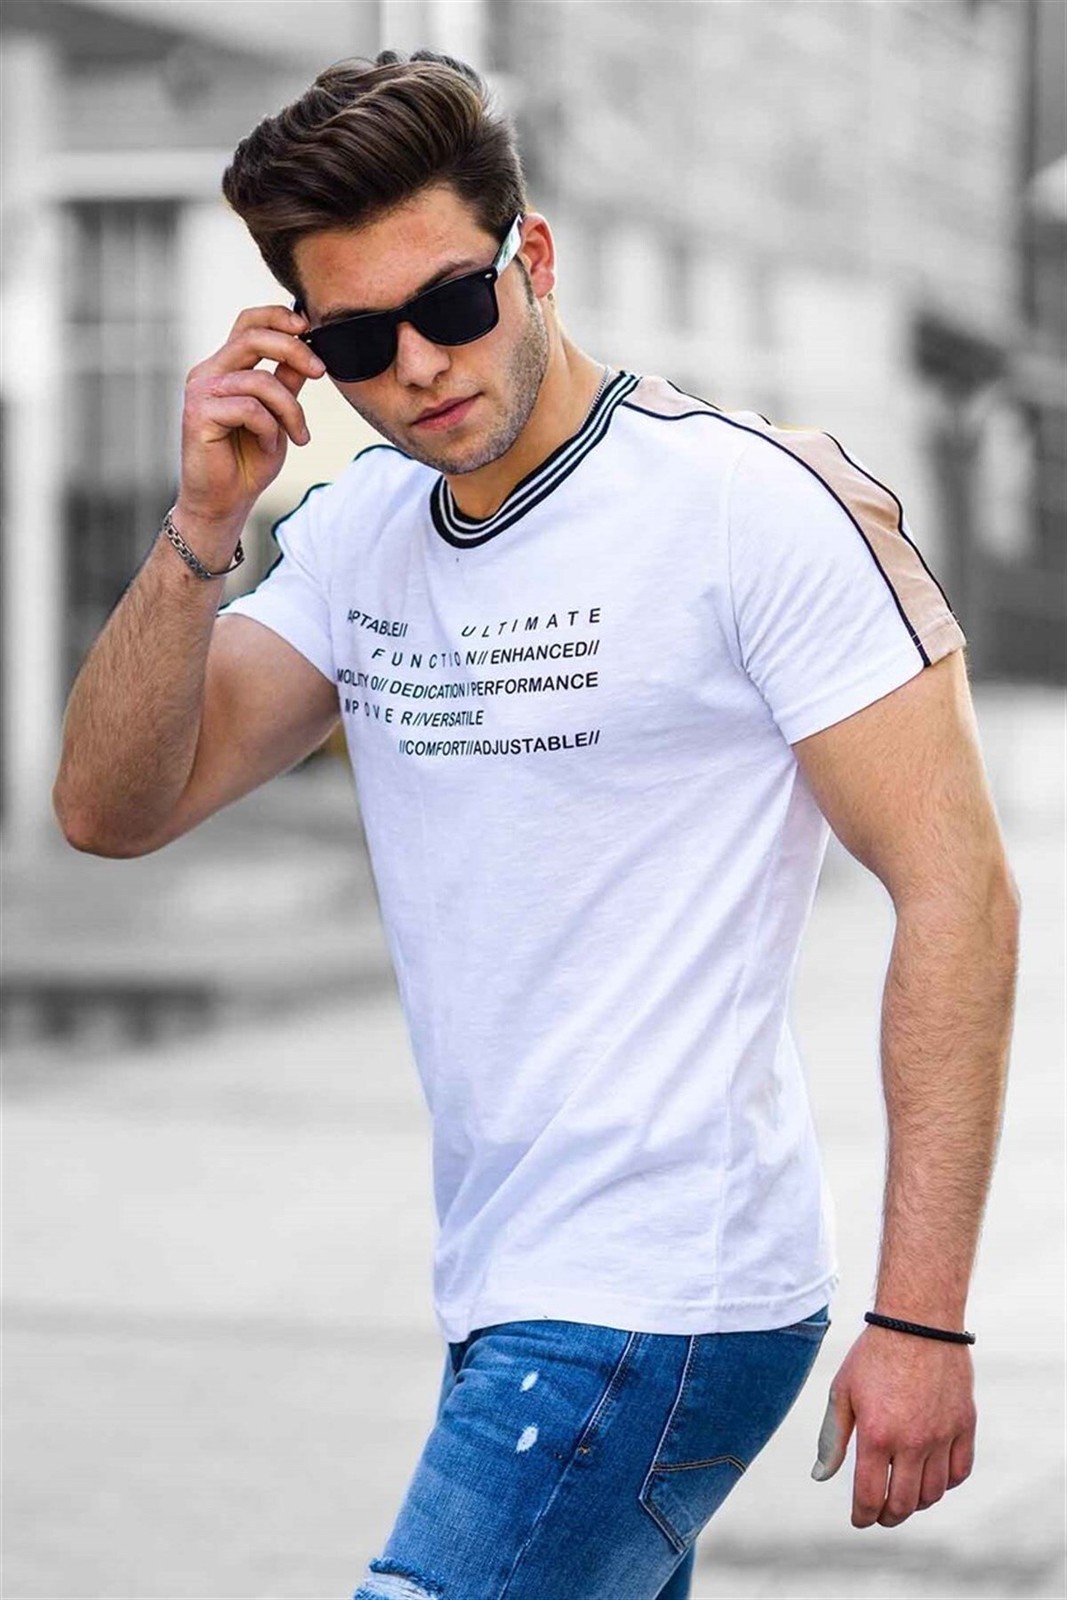 Madmext Men's Printed White T-Shirt 4530